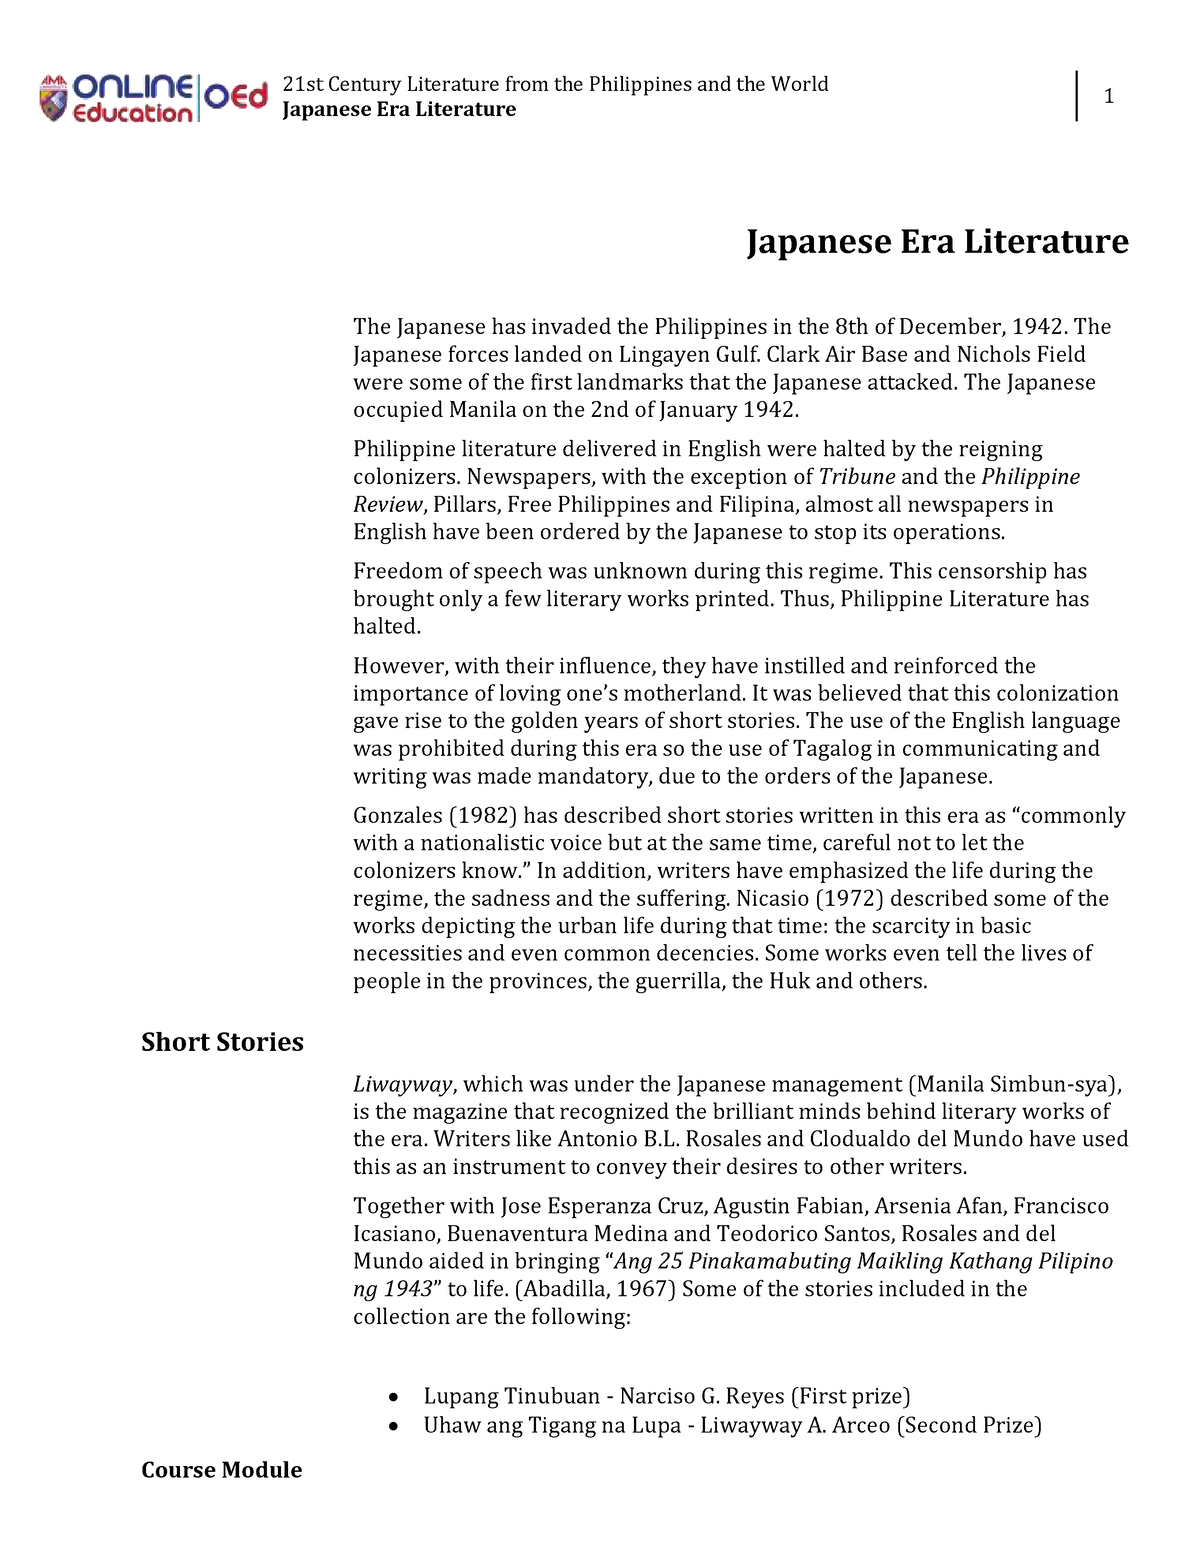 week-004-course-module-japanese-era-literature-21st-century-literature-from-the-philippines